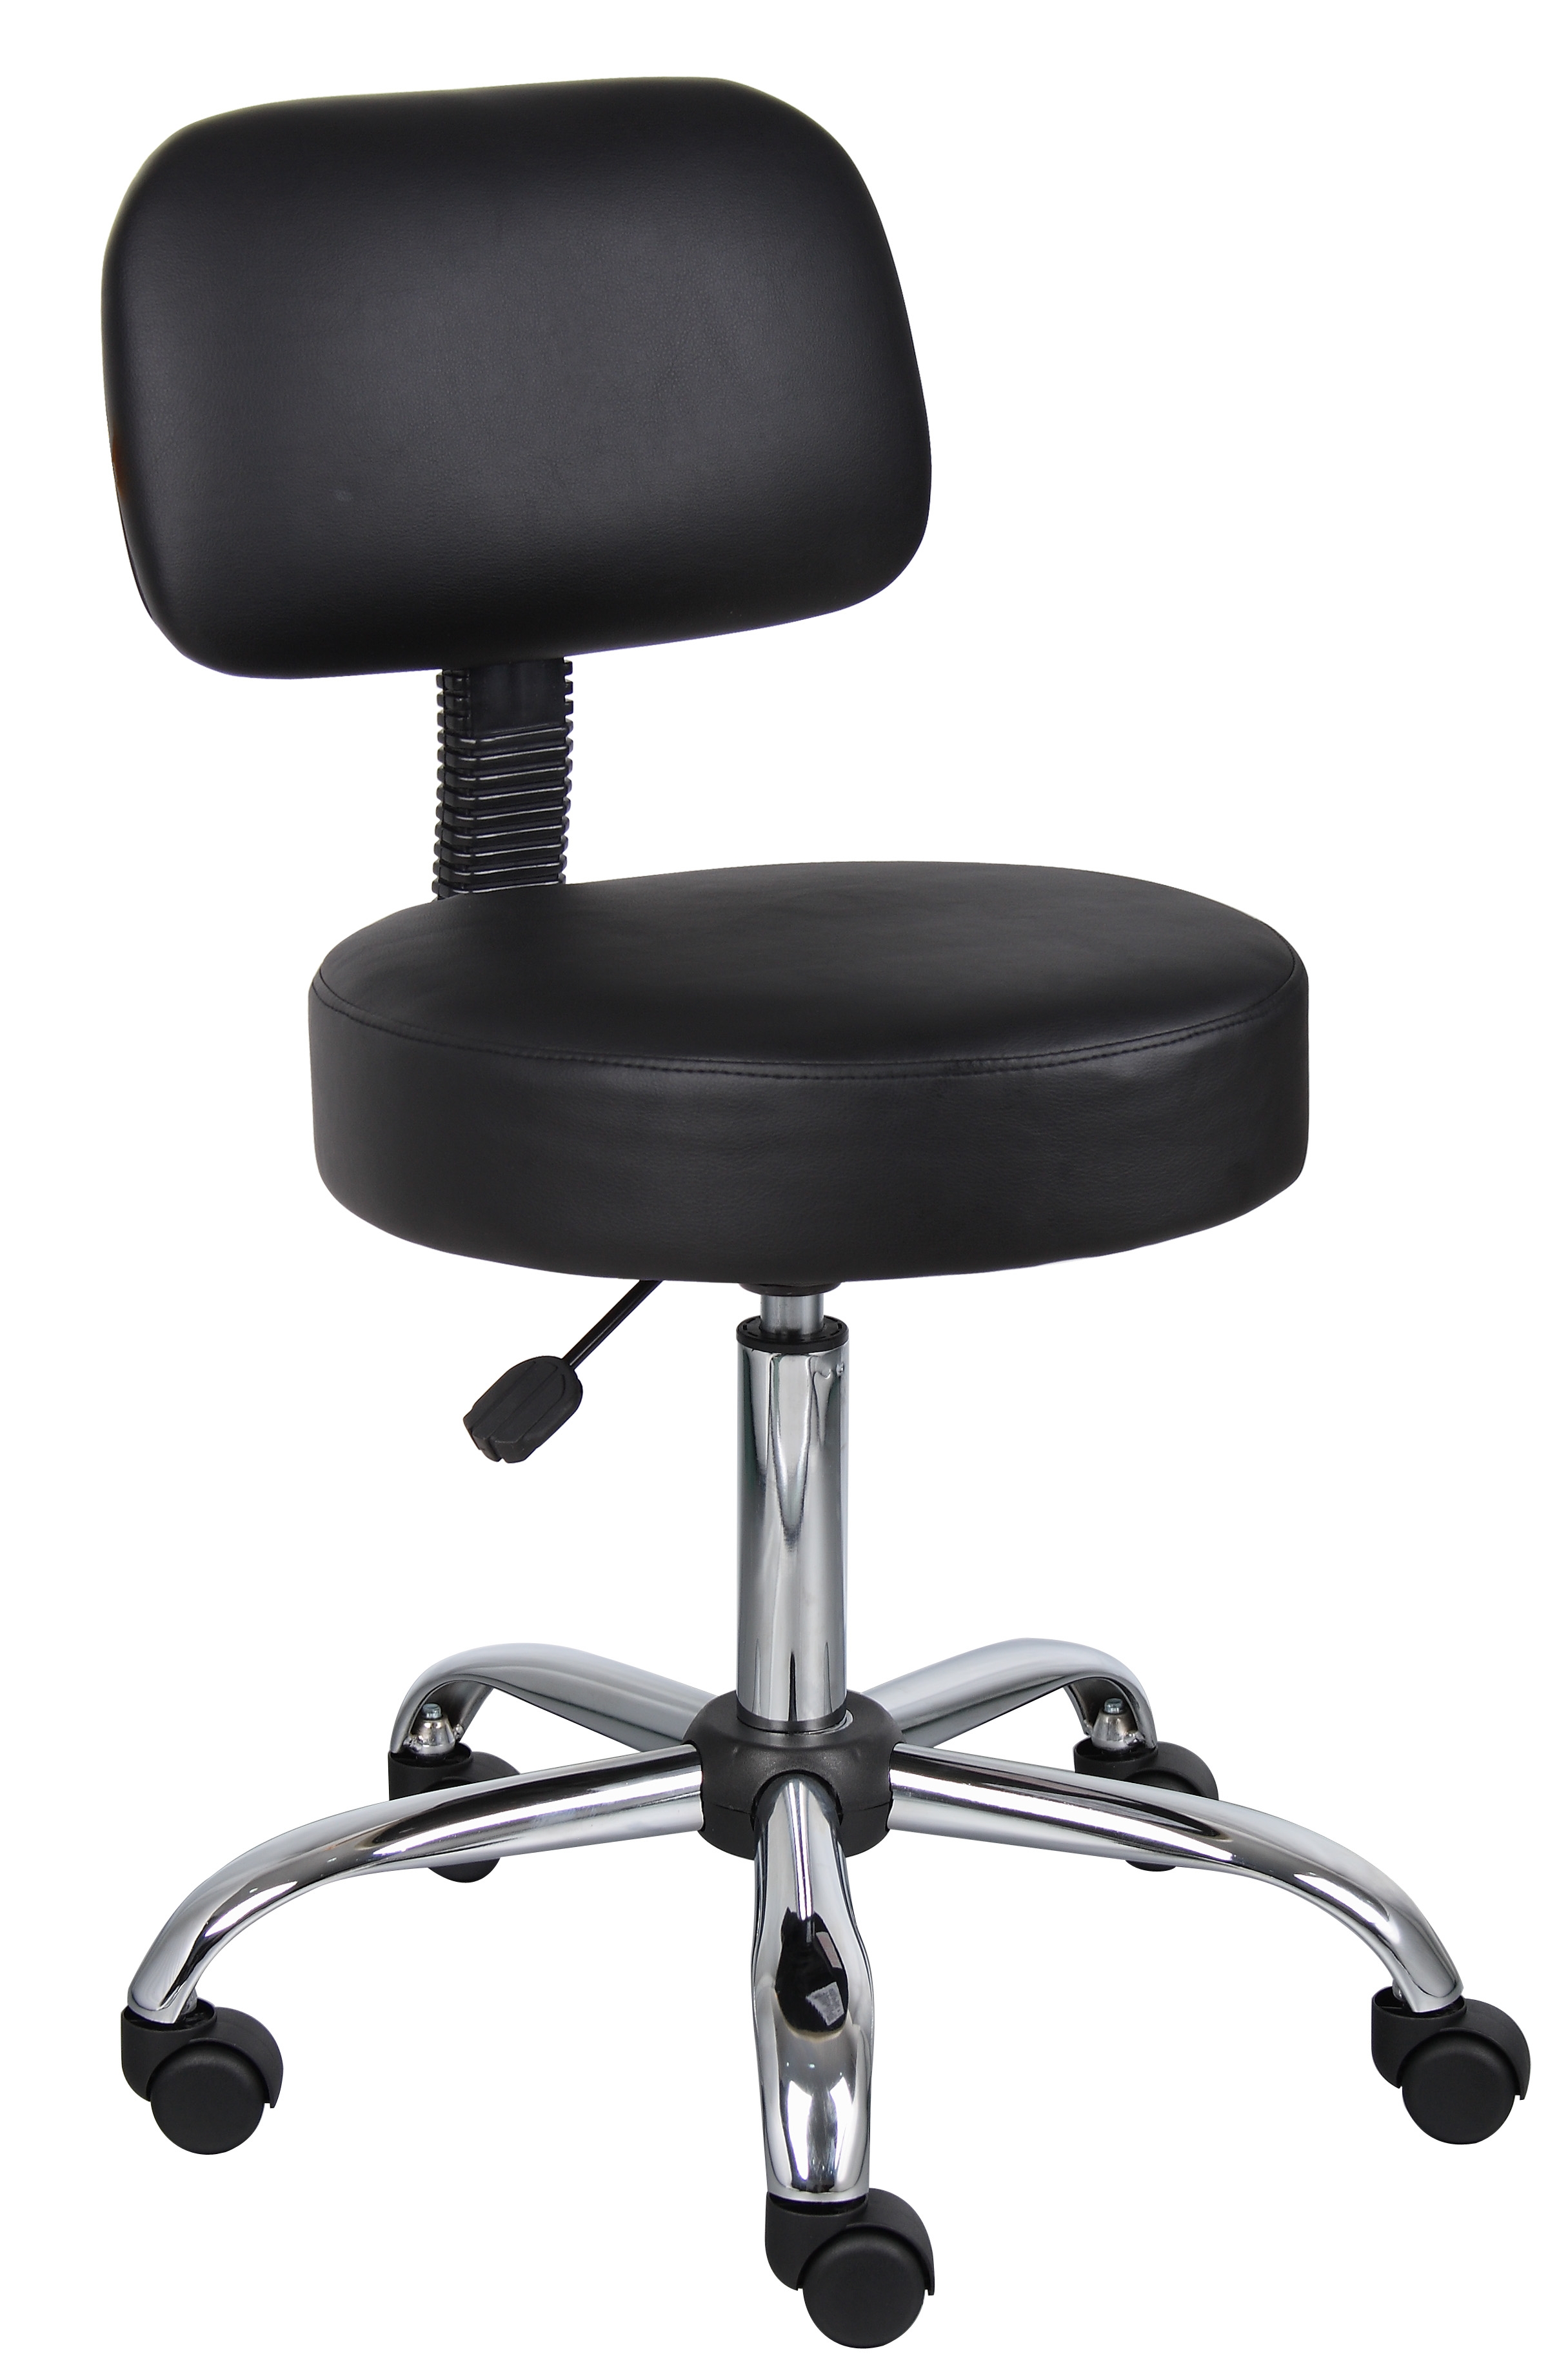 Boss Office & Home B245-BK Adjustable Medical Spa Rolling Desk Stool with Back, Black - image 1 of 7